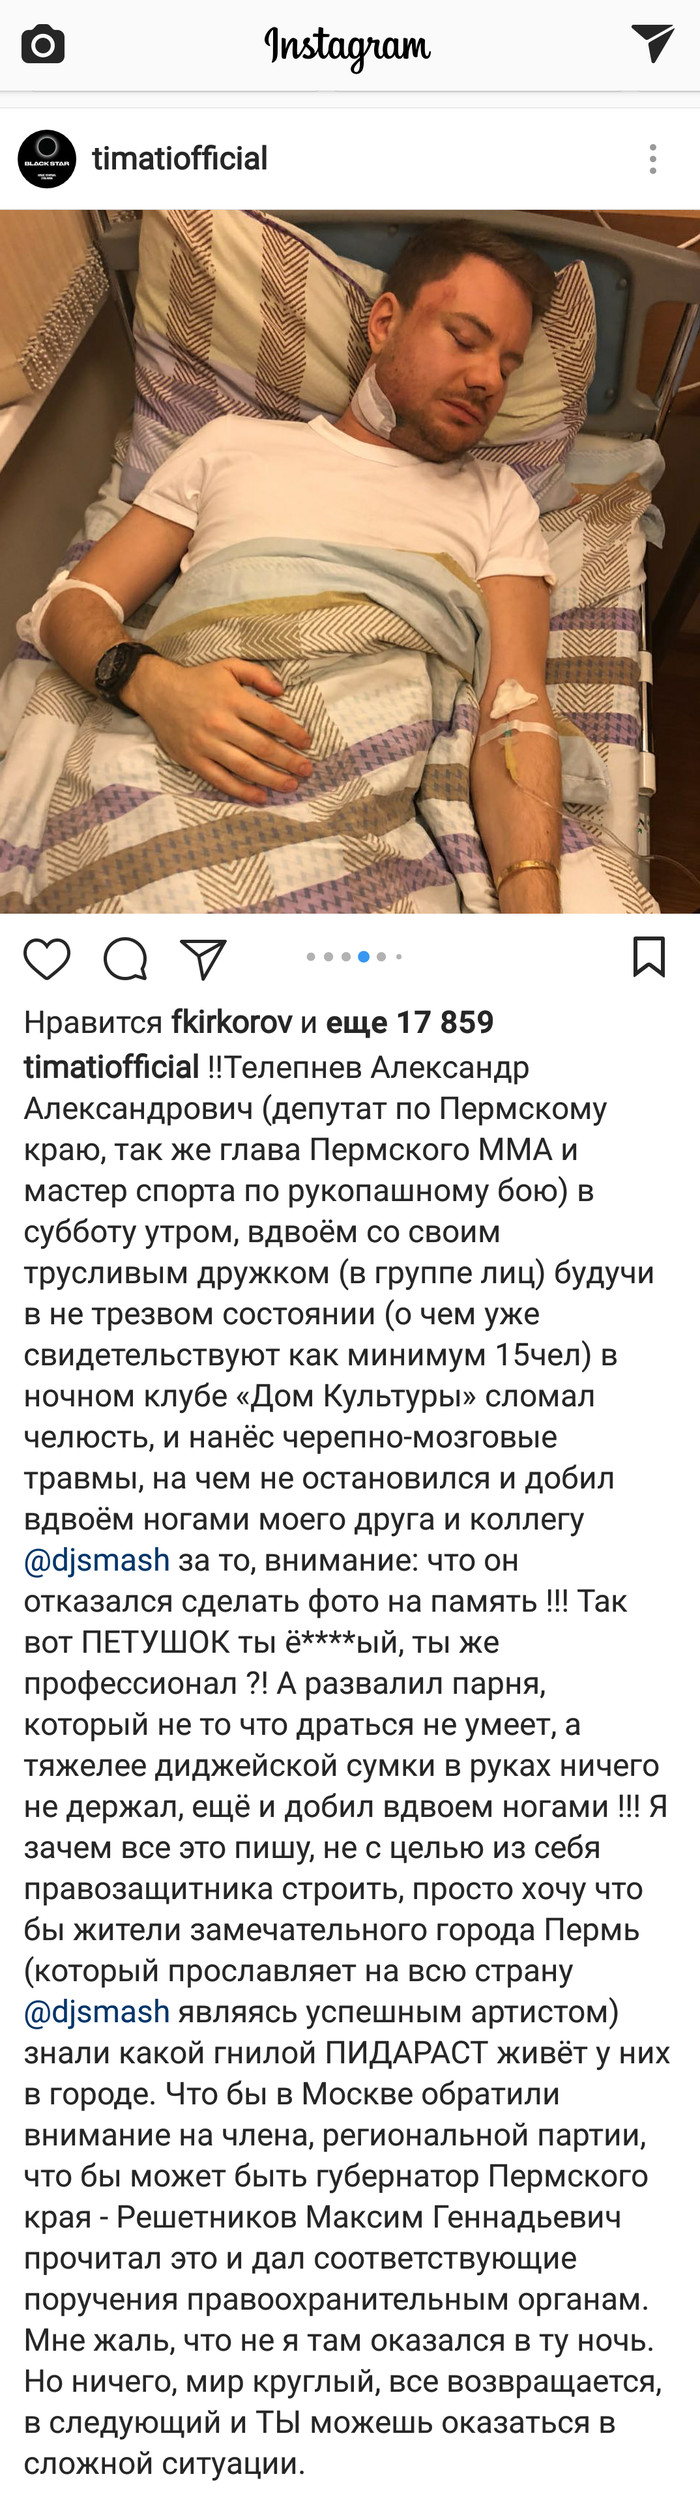 Former deputy of the Perm region beat Dj Smash - DJ Smash, Permian, Telepnev, Beating, Arbitrariness, Deputies, Longpost, Politics